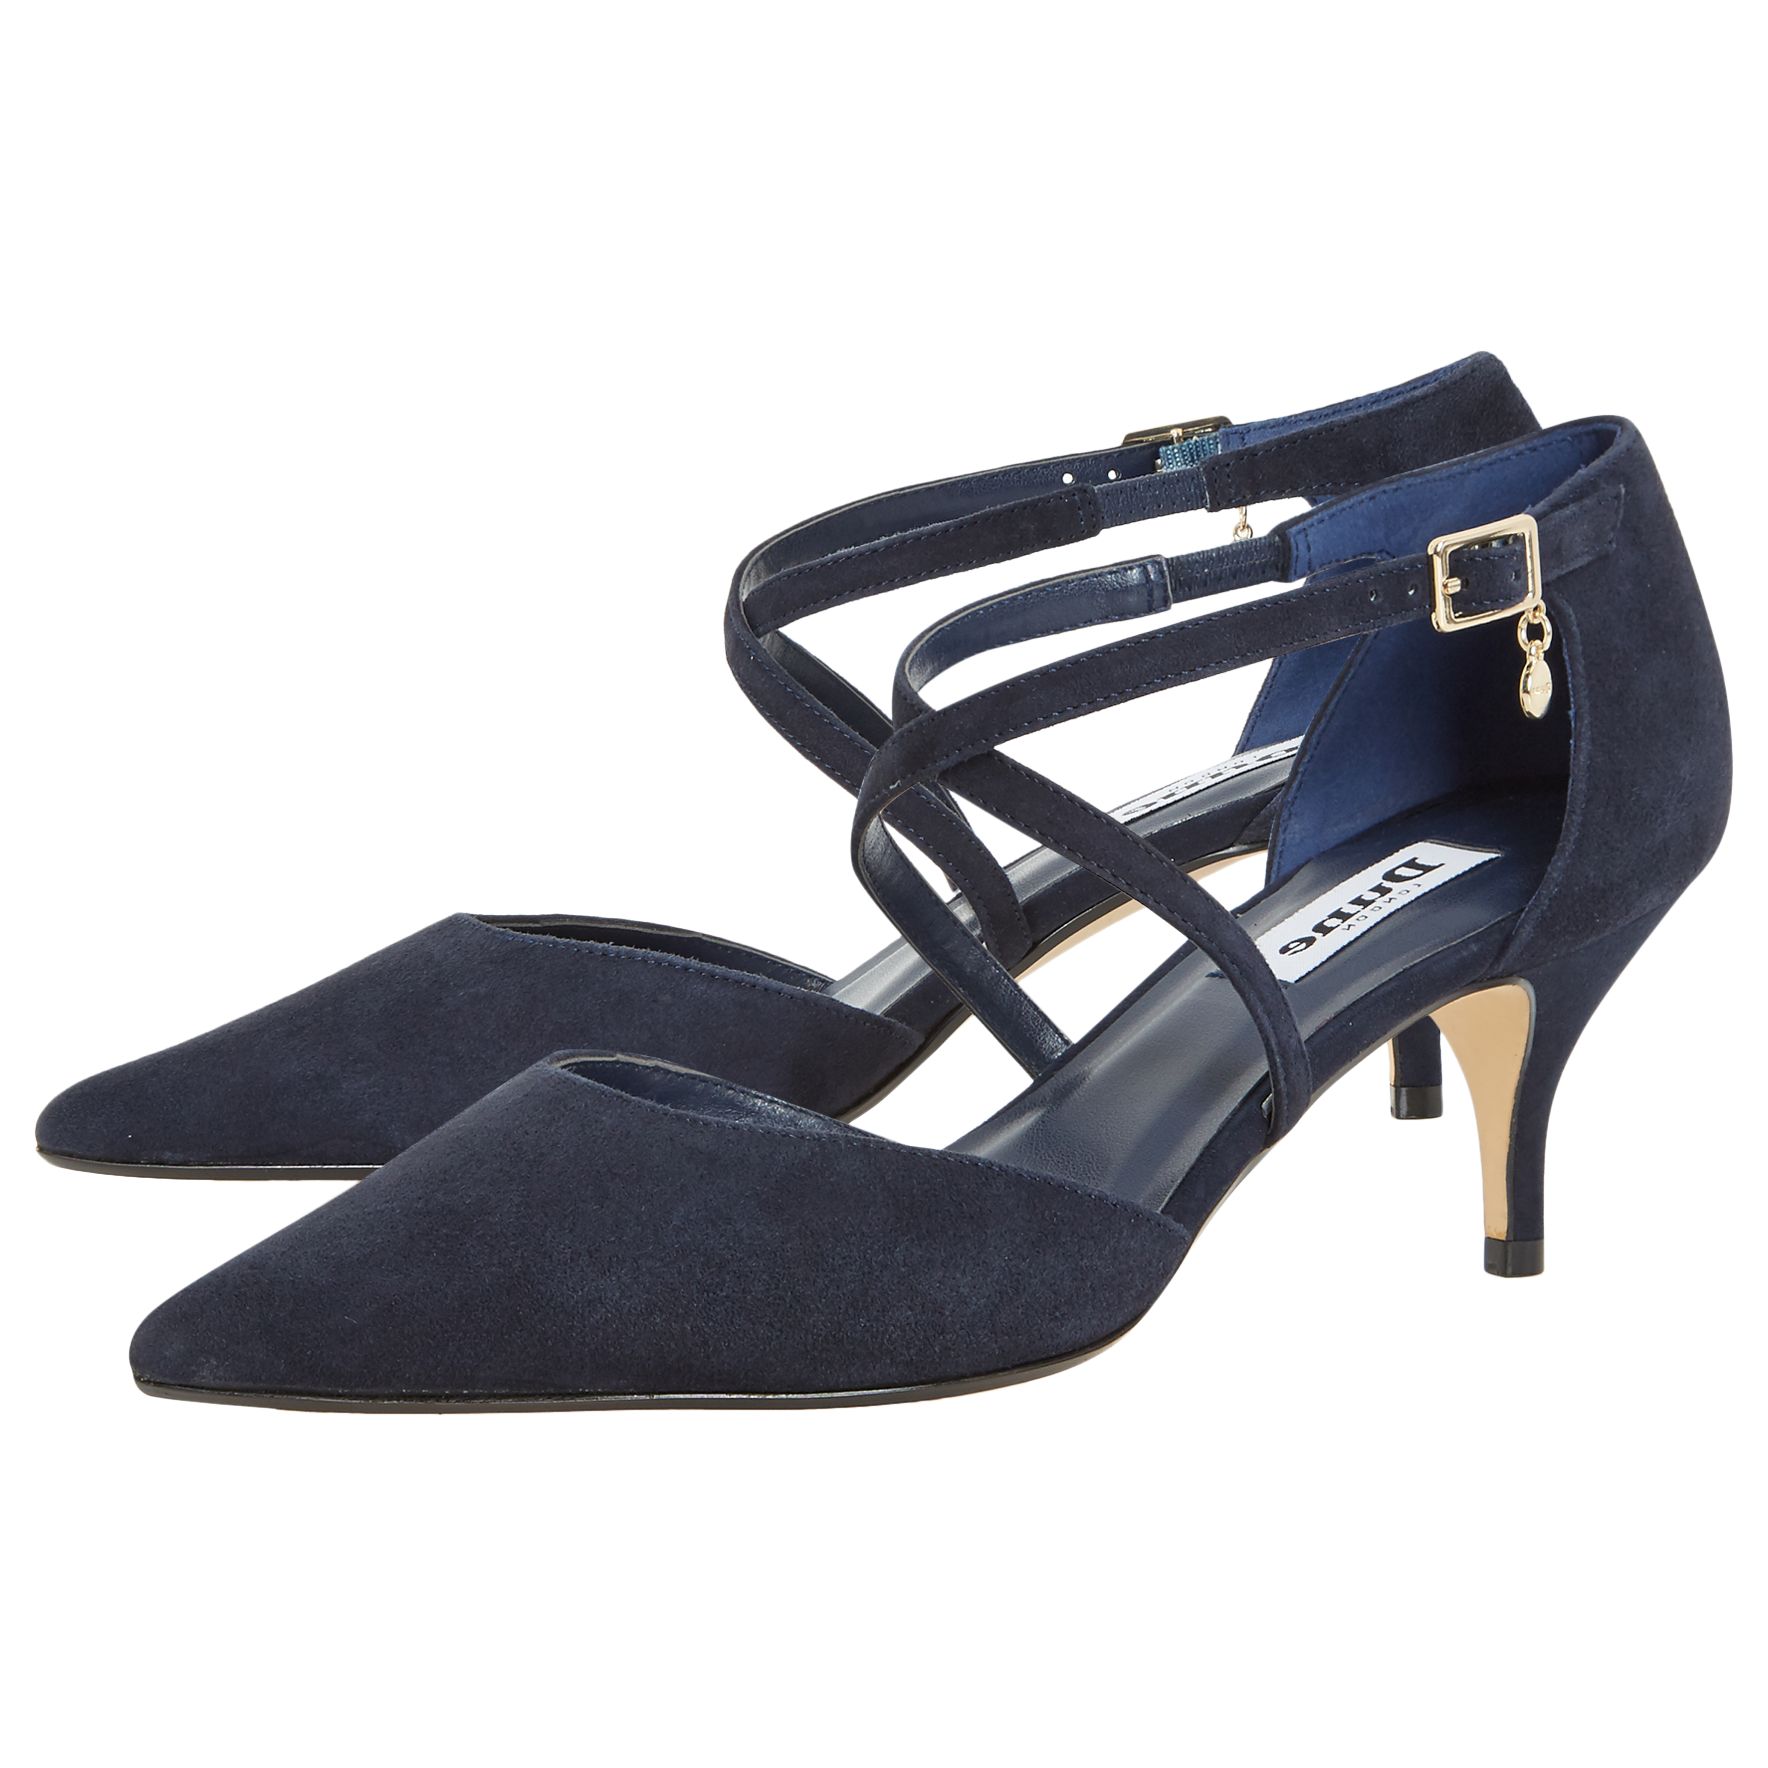 navy blue low heel court shoes